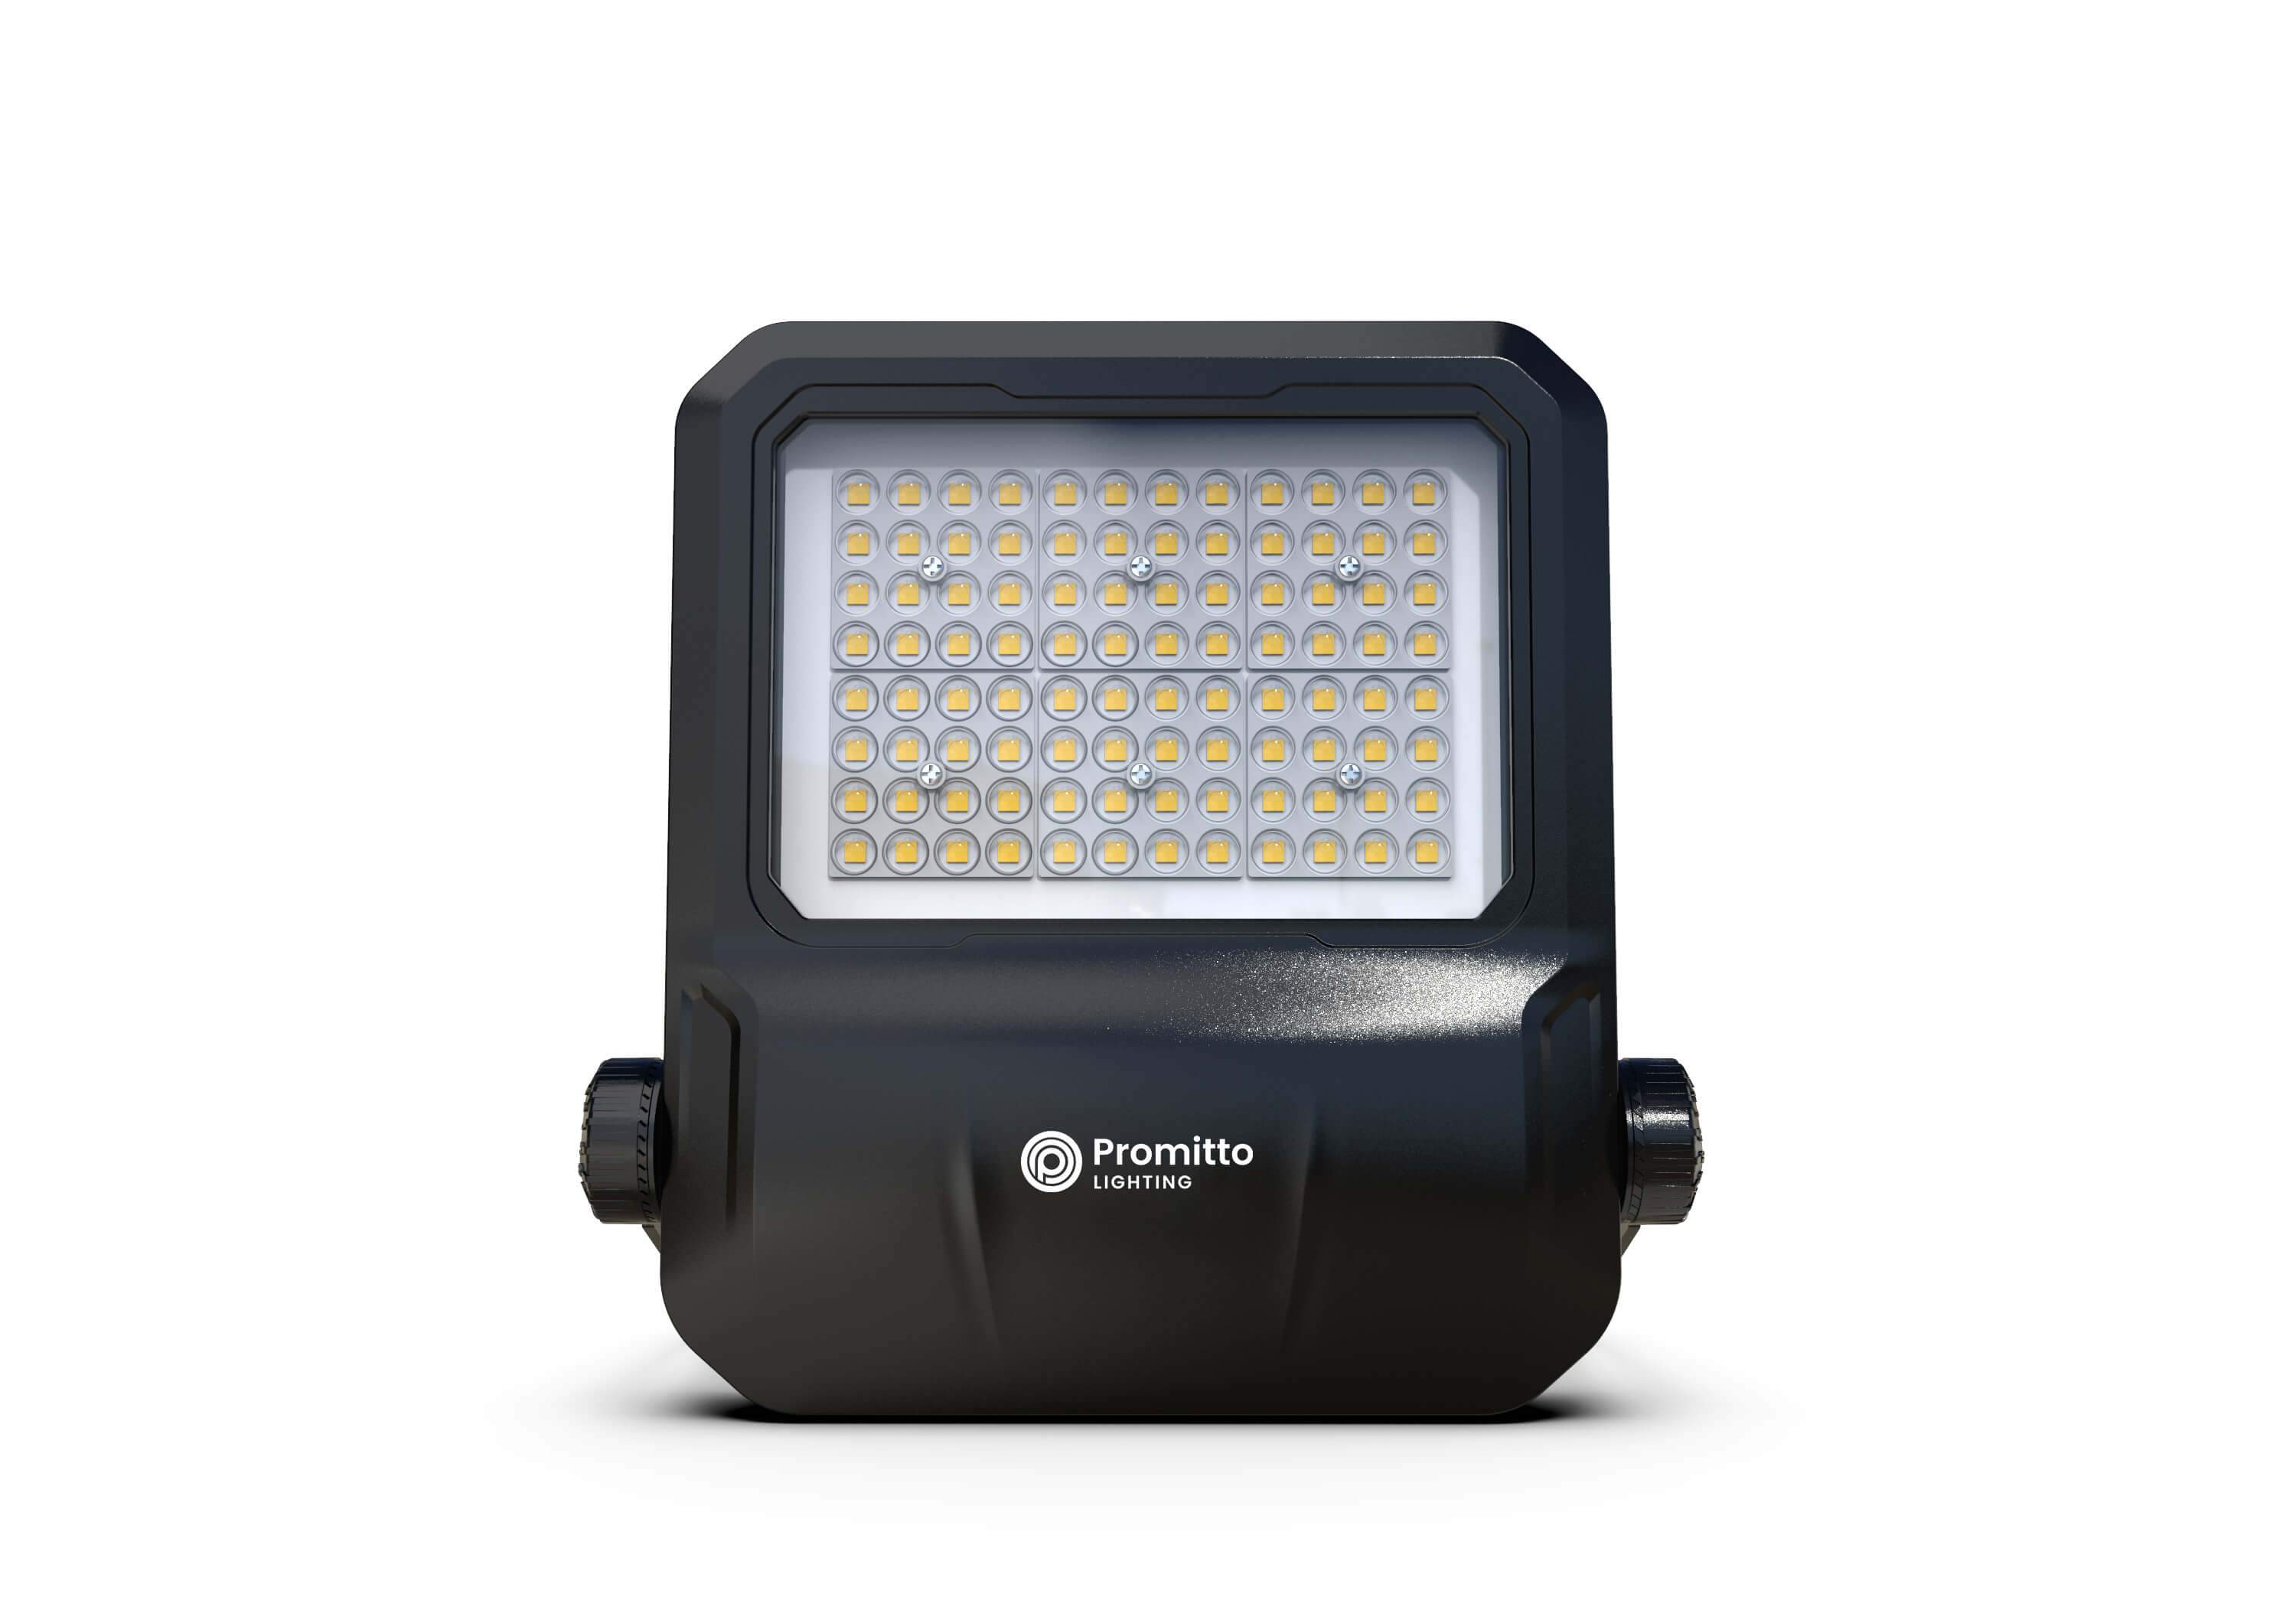 REFLECTOR LED 300 WATTS – Light-tec